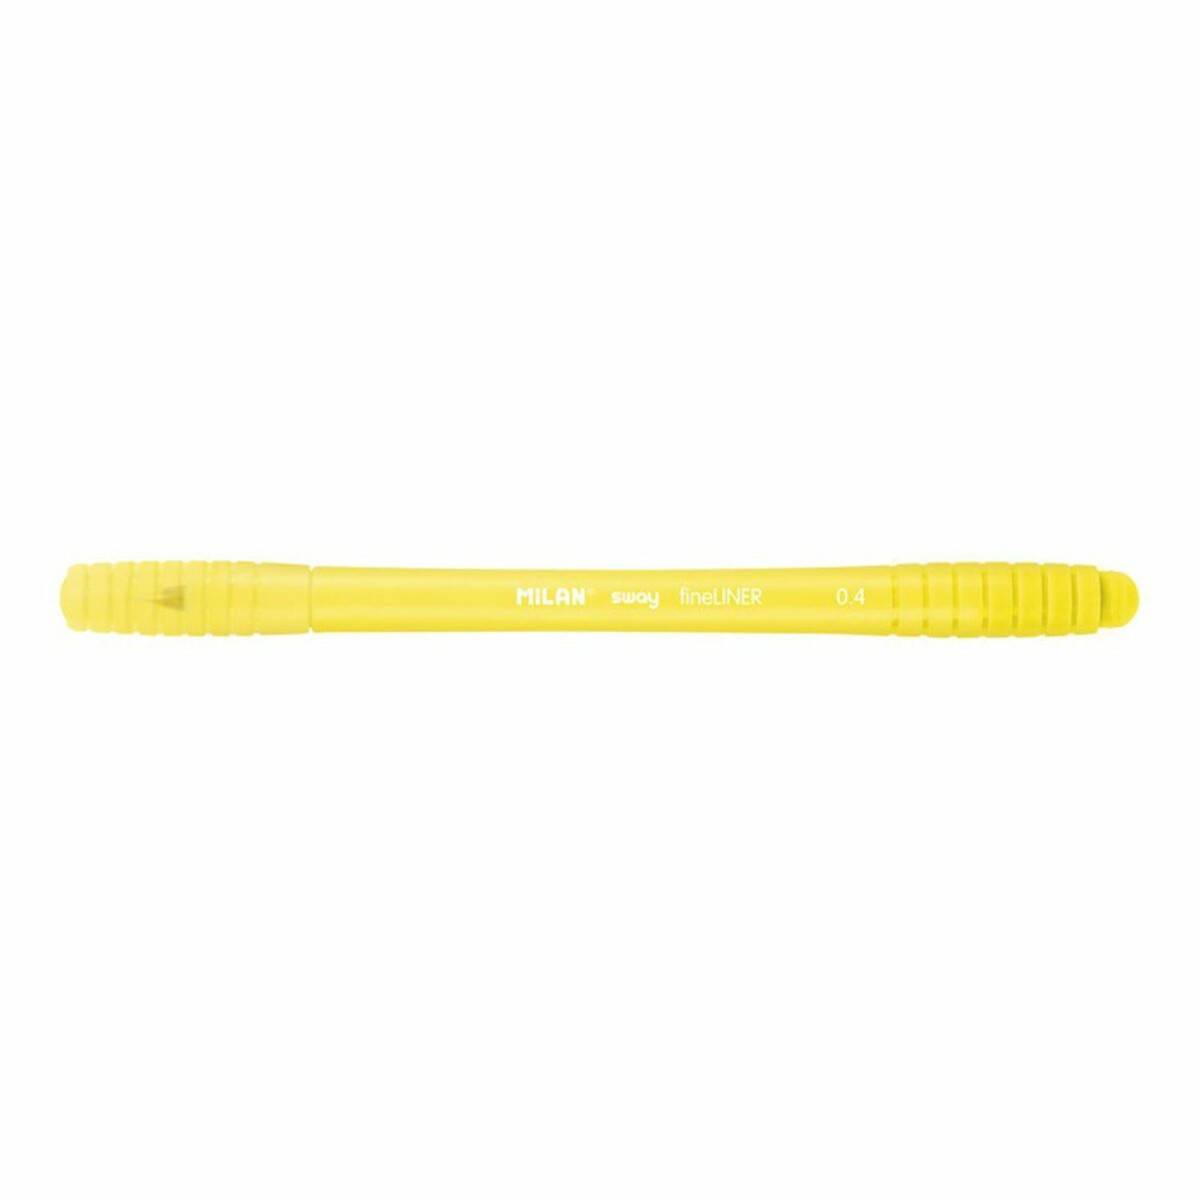 Cienkopis Sway Fineliner żółty 0,4mm